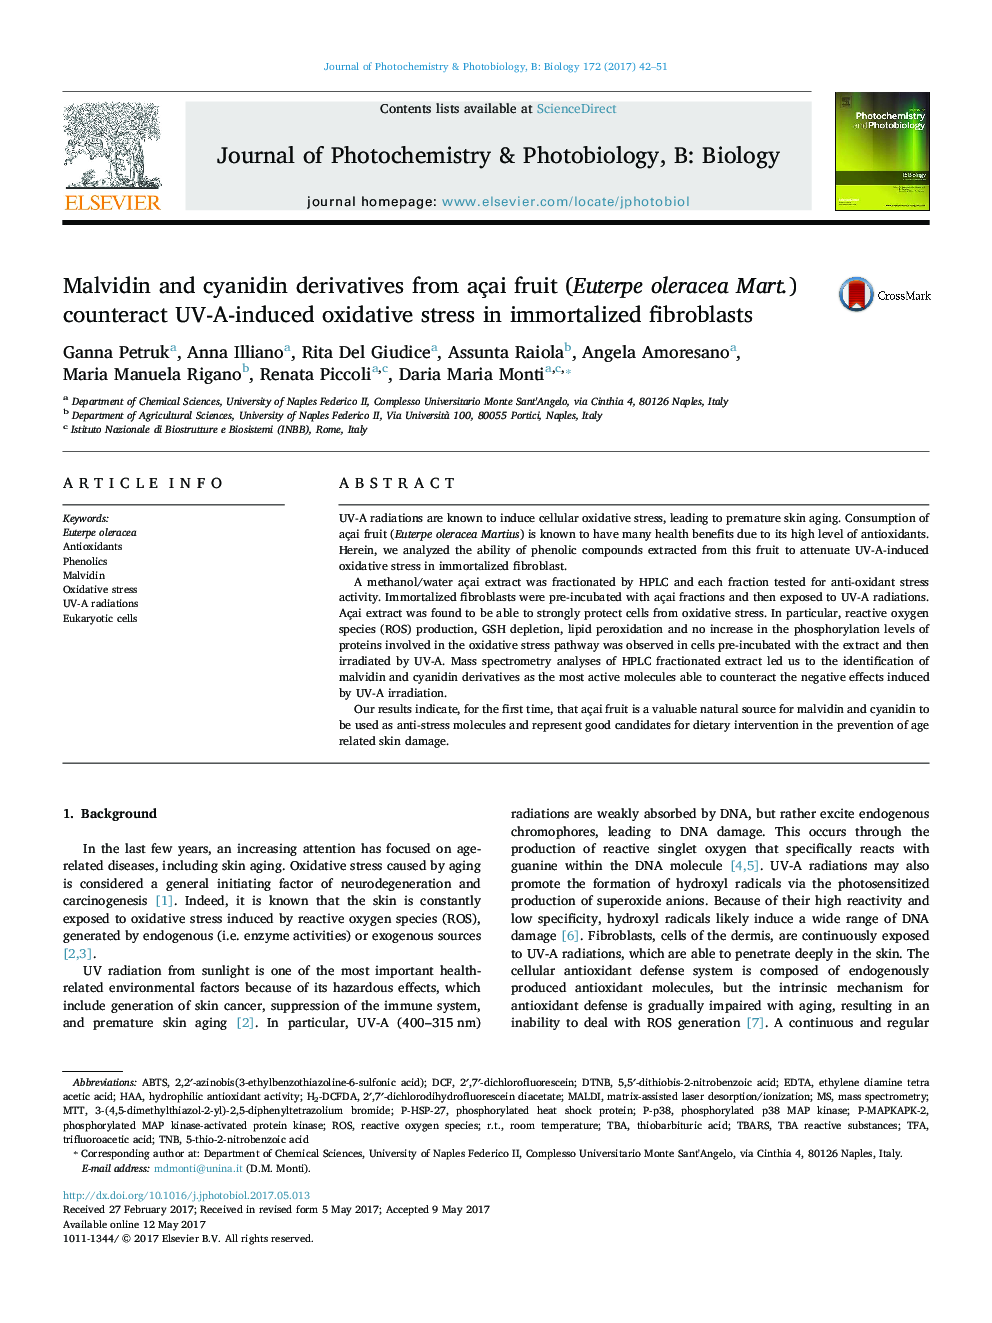 Malvidin and cyanidin derivatives from açai fruit (Euterpe oleracea Mart.) counteract UV-A-induced oxidative stress in immortalized fibroblasts